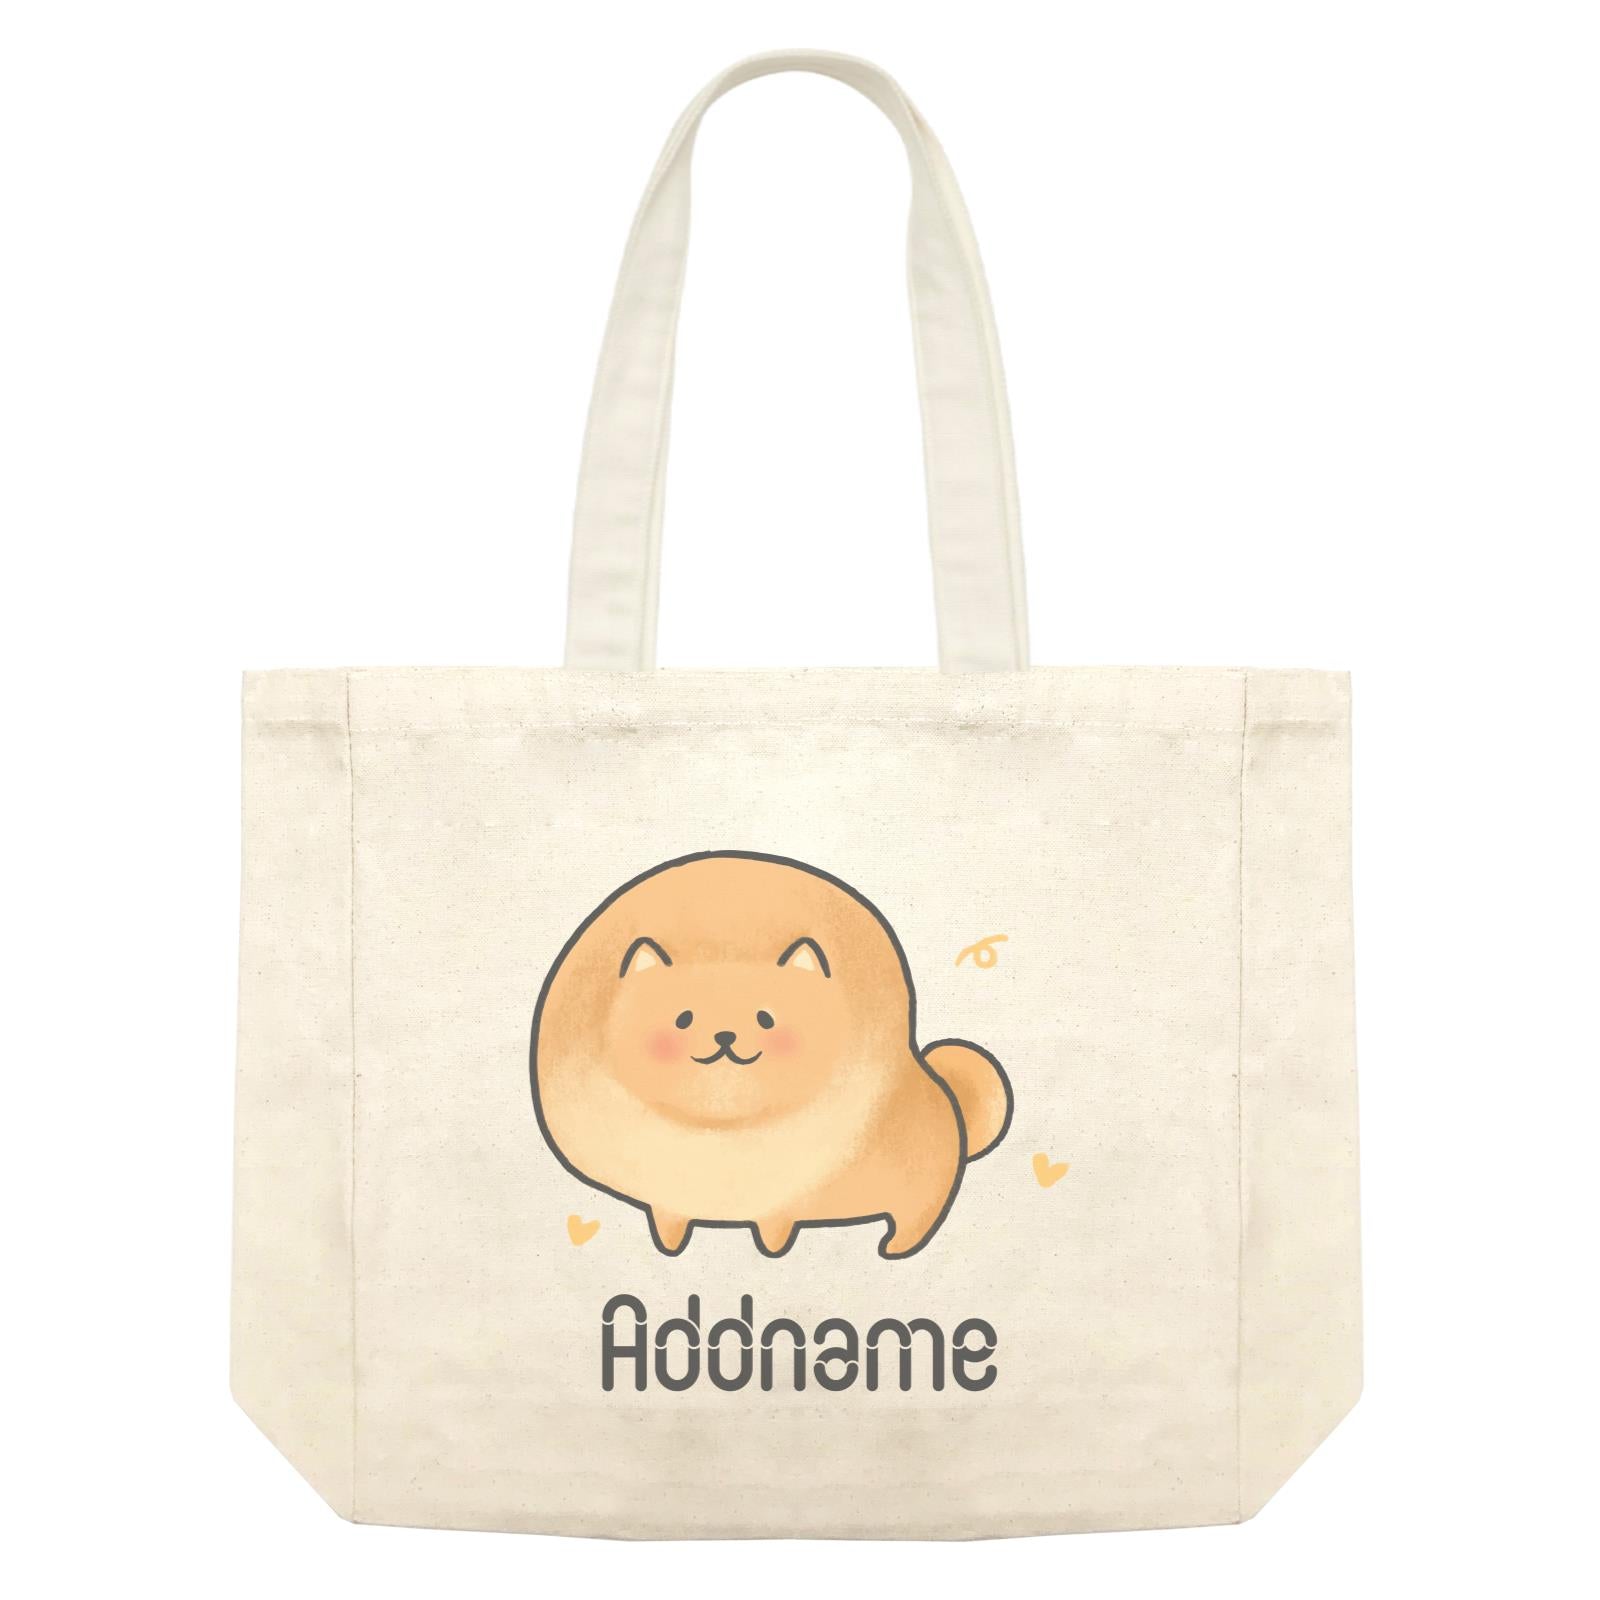 Cute Hand Drawn Style Pomeranian Addname Shopping Bag